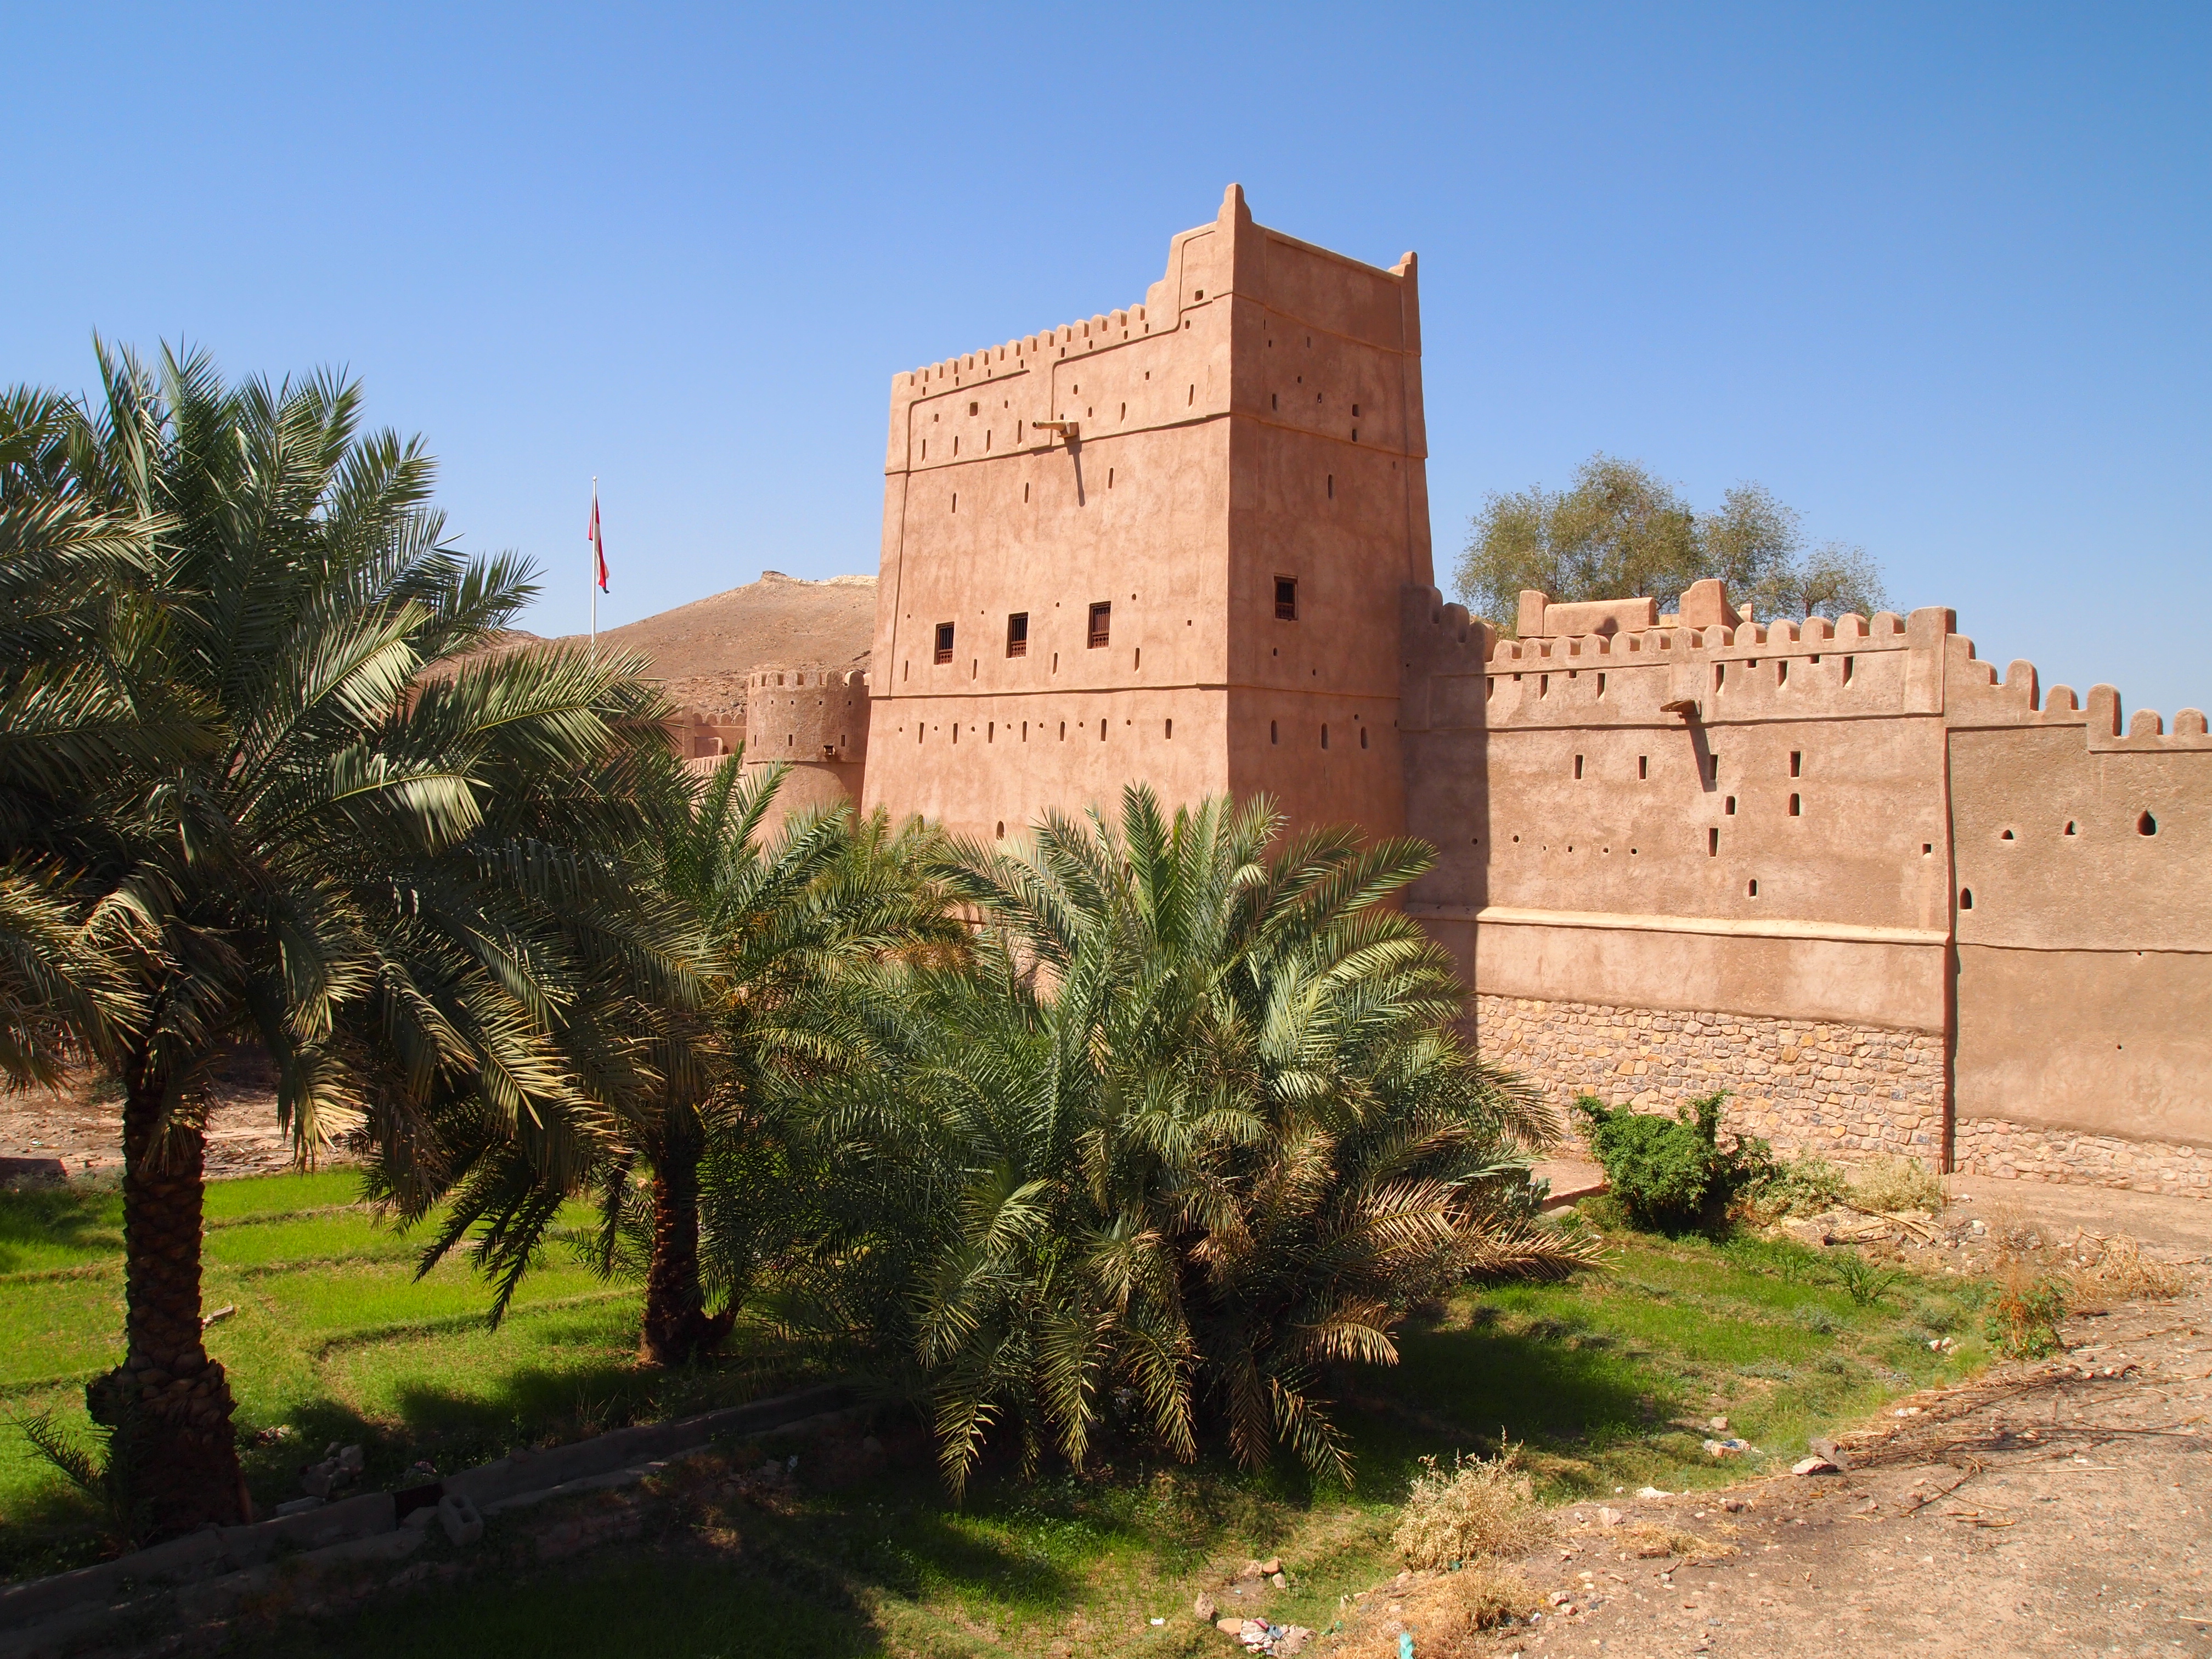 Husn Bait al Marah: A gateway to history